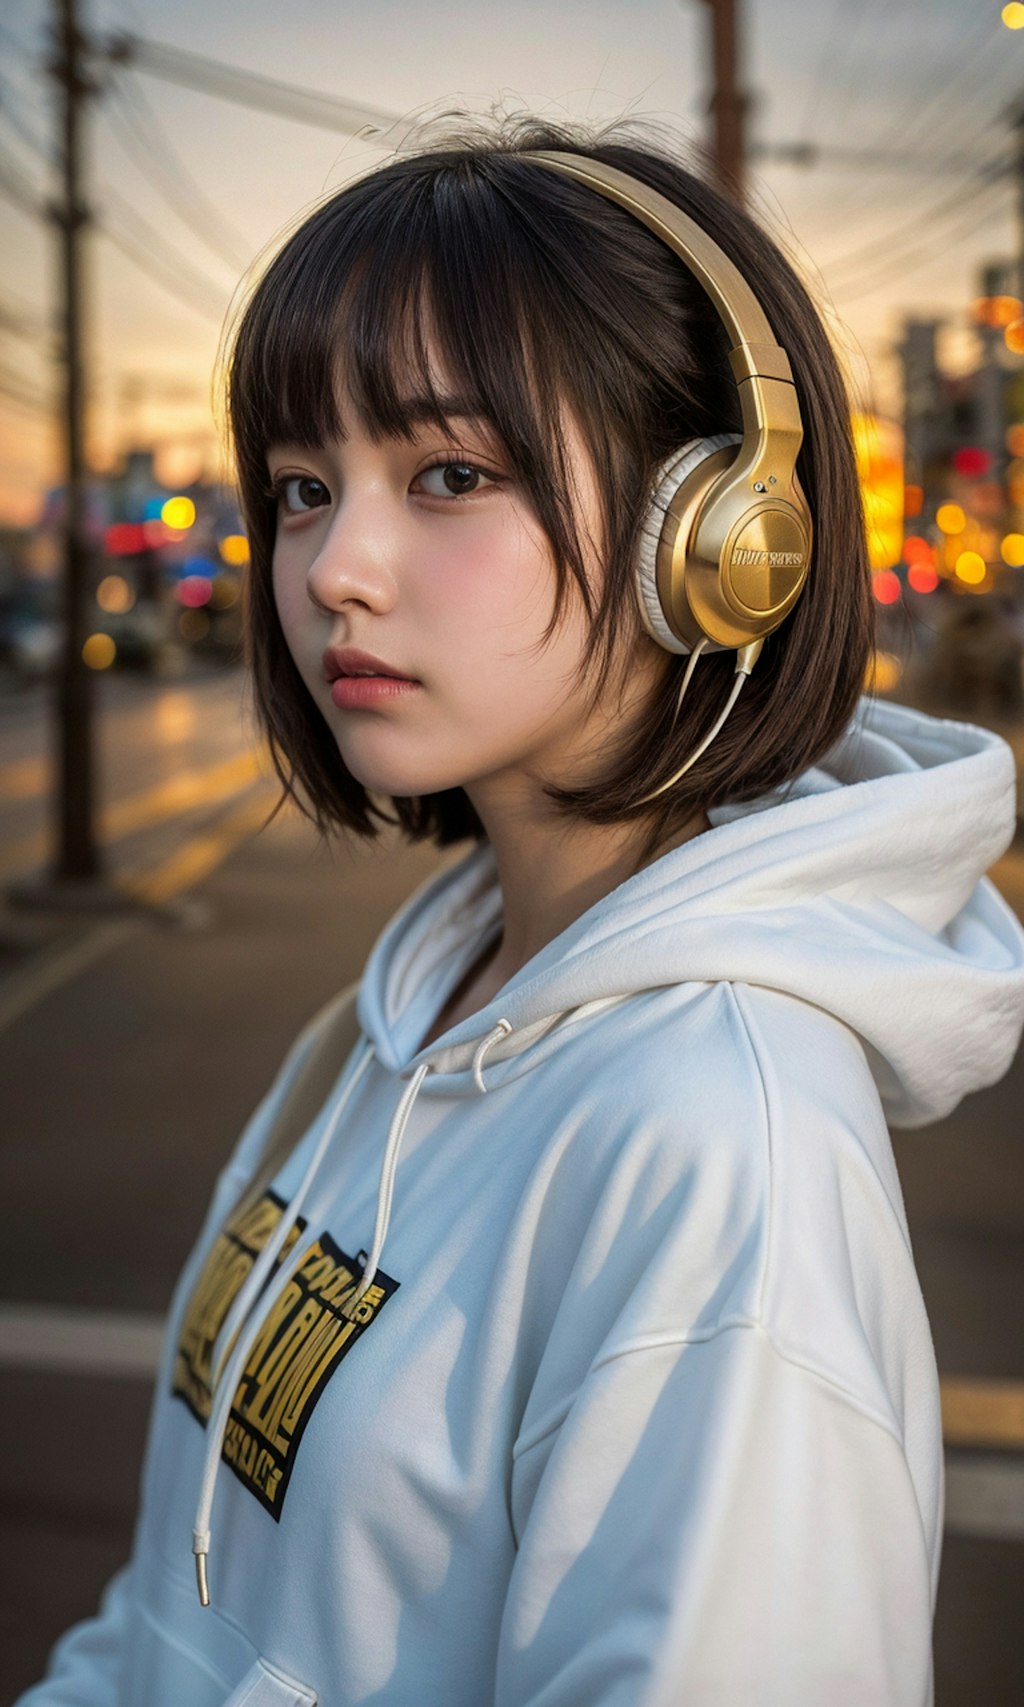 headphones,